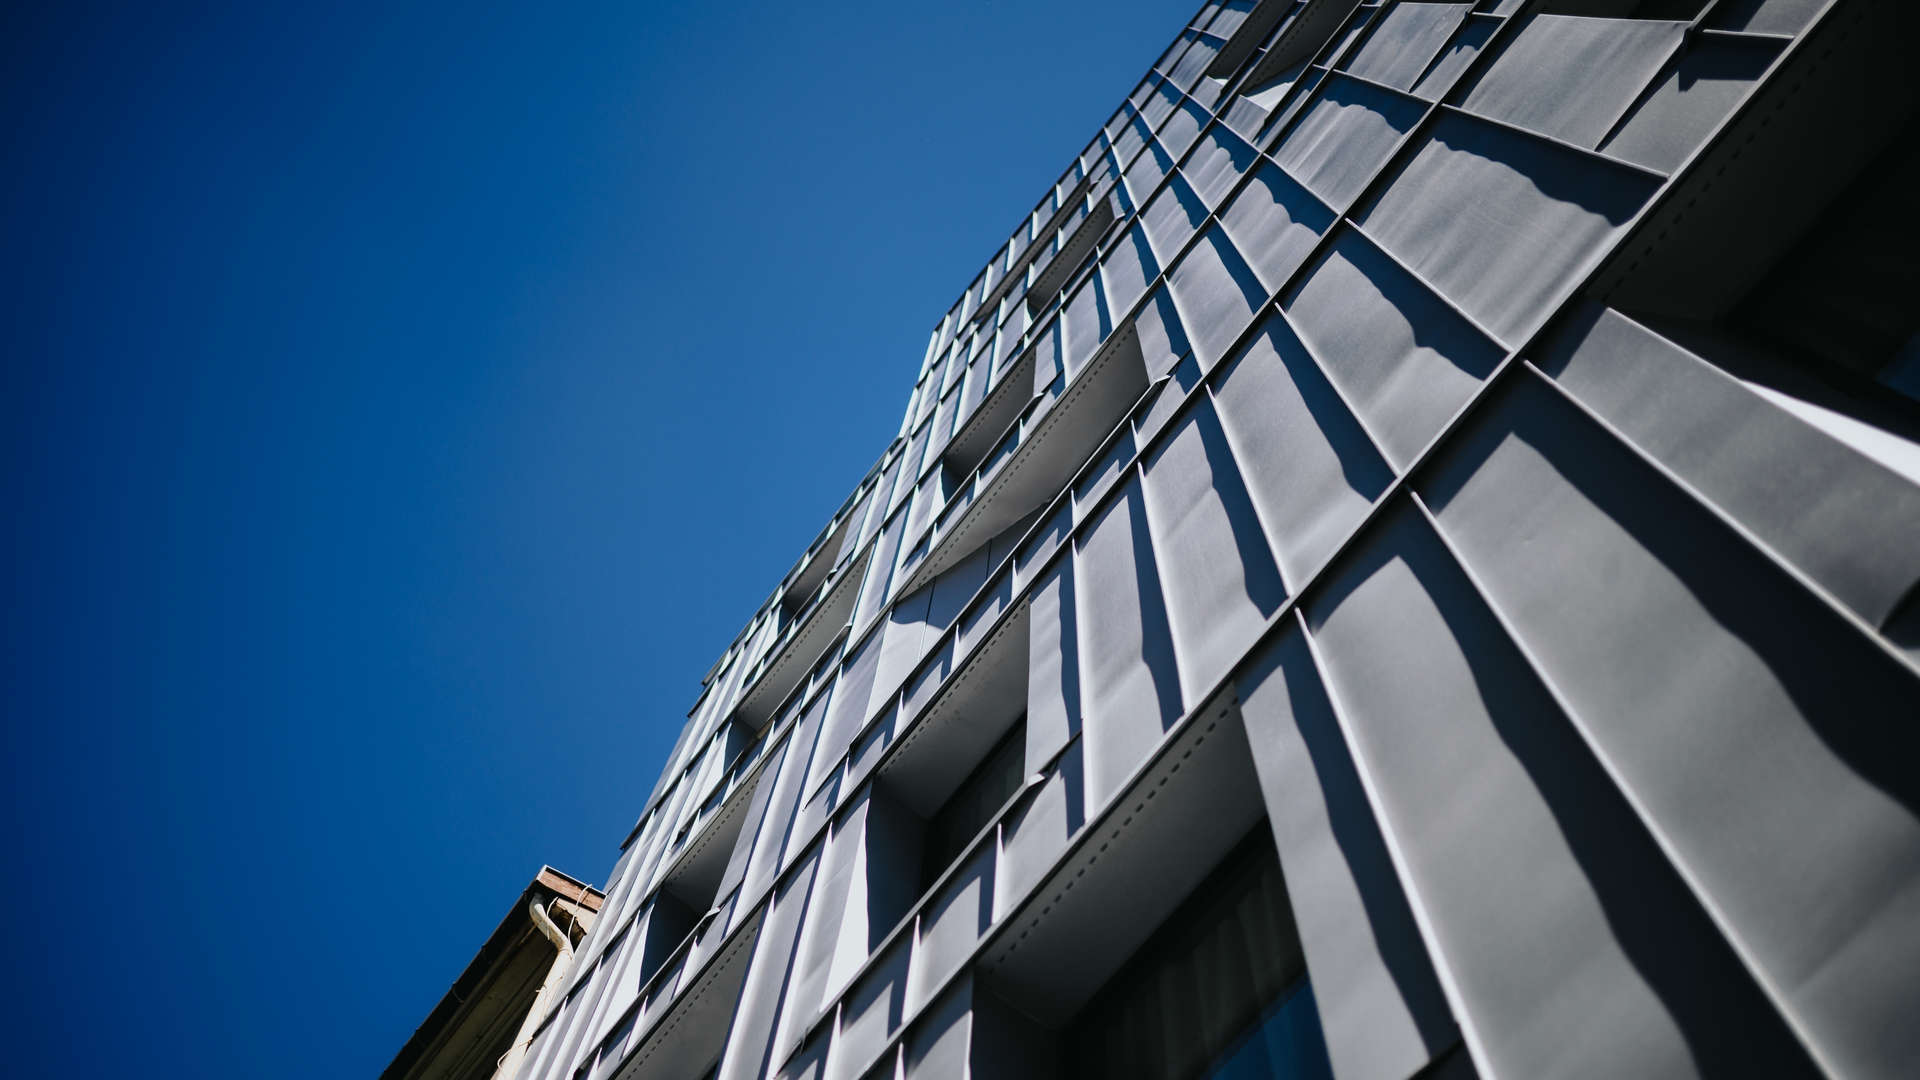 vue oblique de la façade de l'hôtel boutique de Lyon contre le ciel bleu - Hôtel Keystone